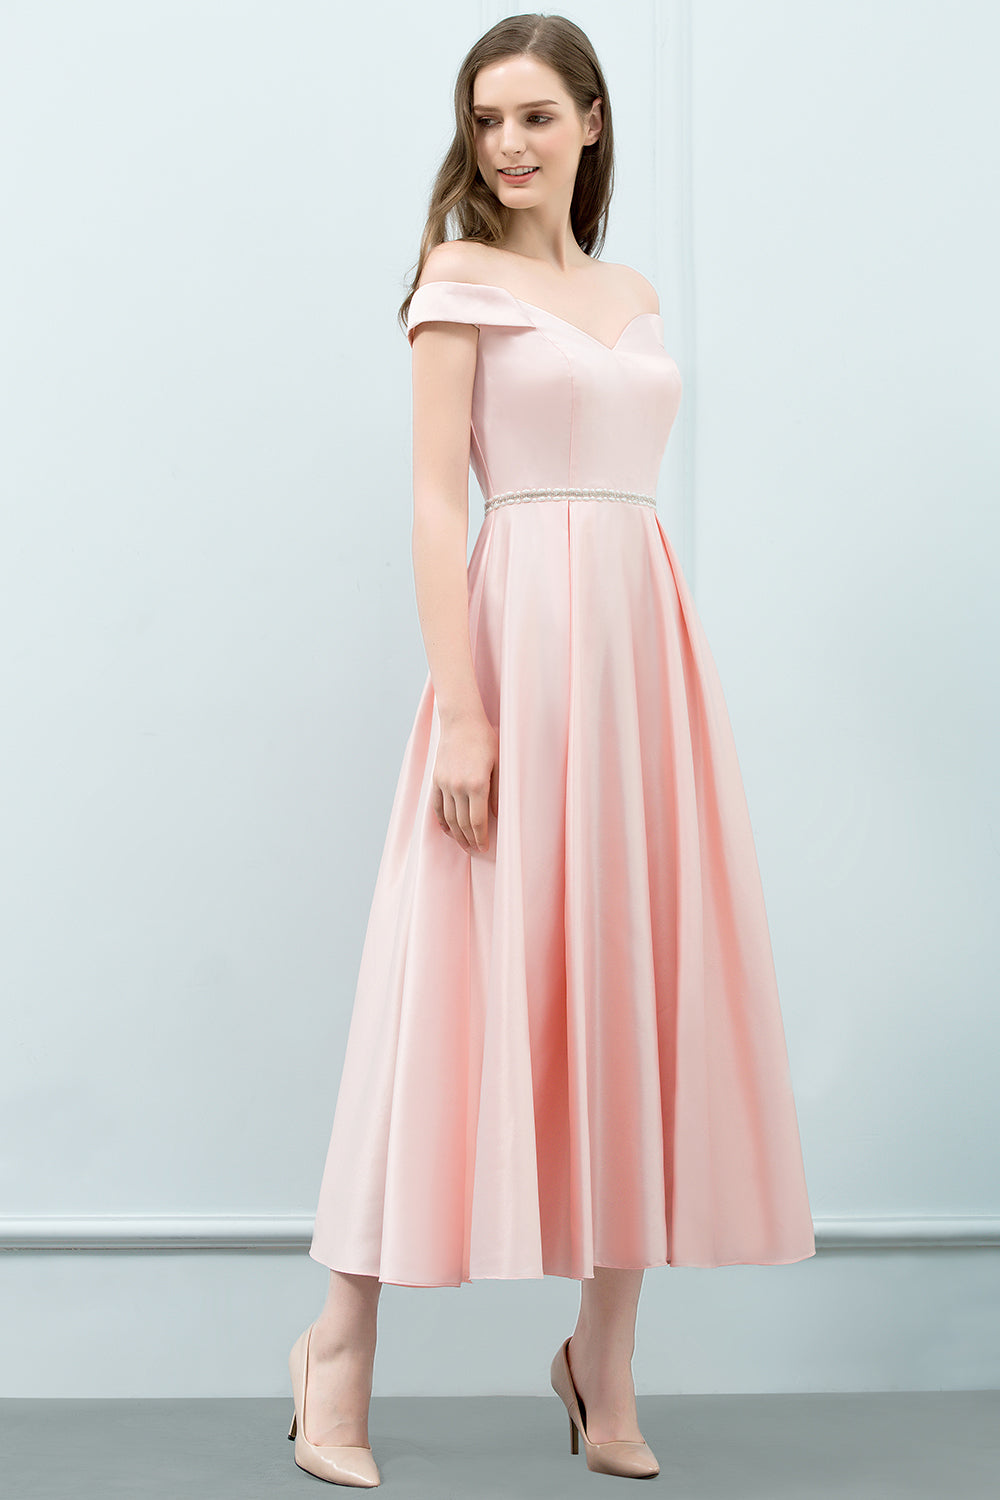 Pink A-Line Off The Shoulder Crystal Short Bridesmaid Dress-BIZTUNNEL